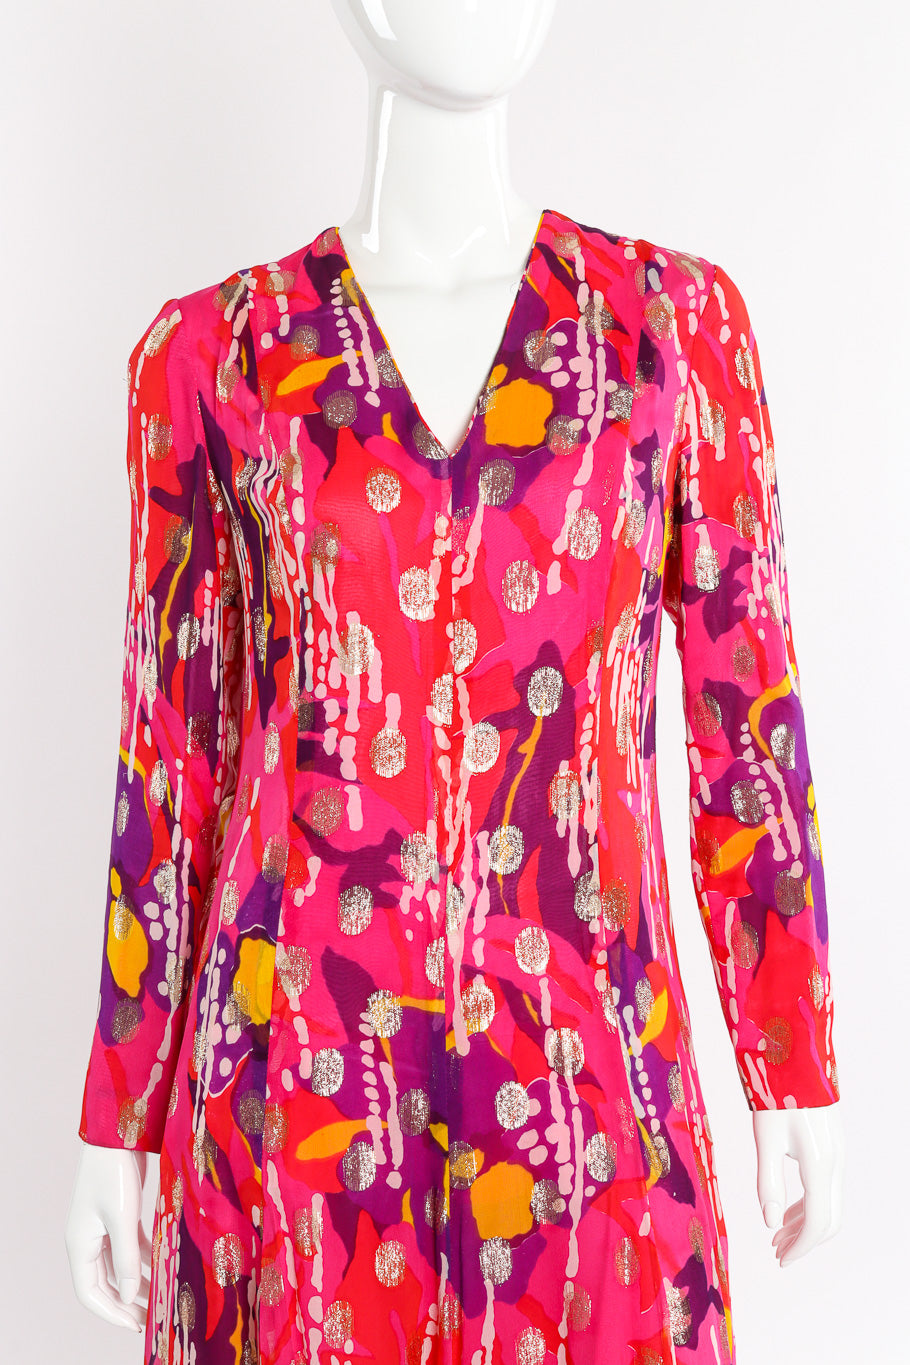 Vintage Doreen Loh Abstract Floral Print Maxi Dress front view on mannequin closeup @Recessla